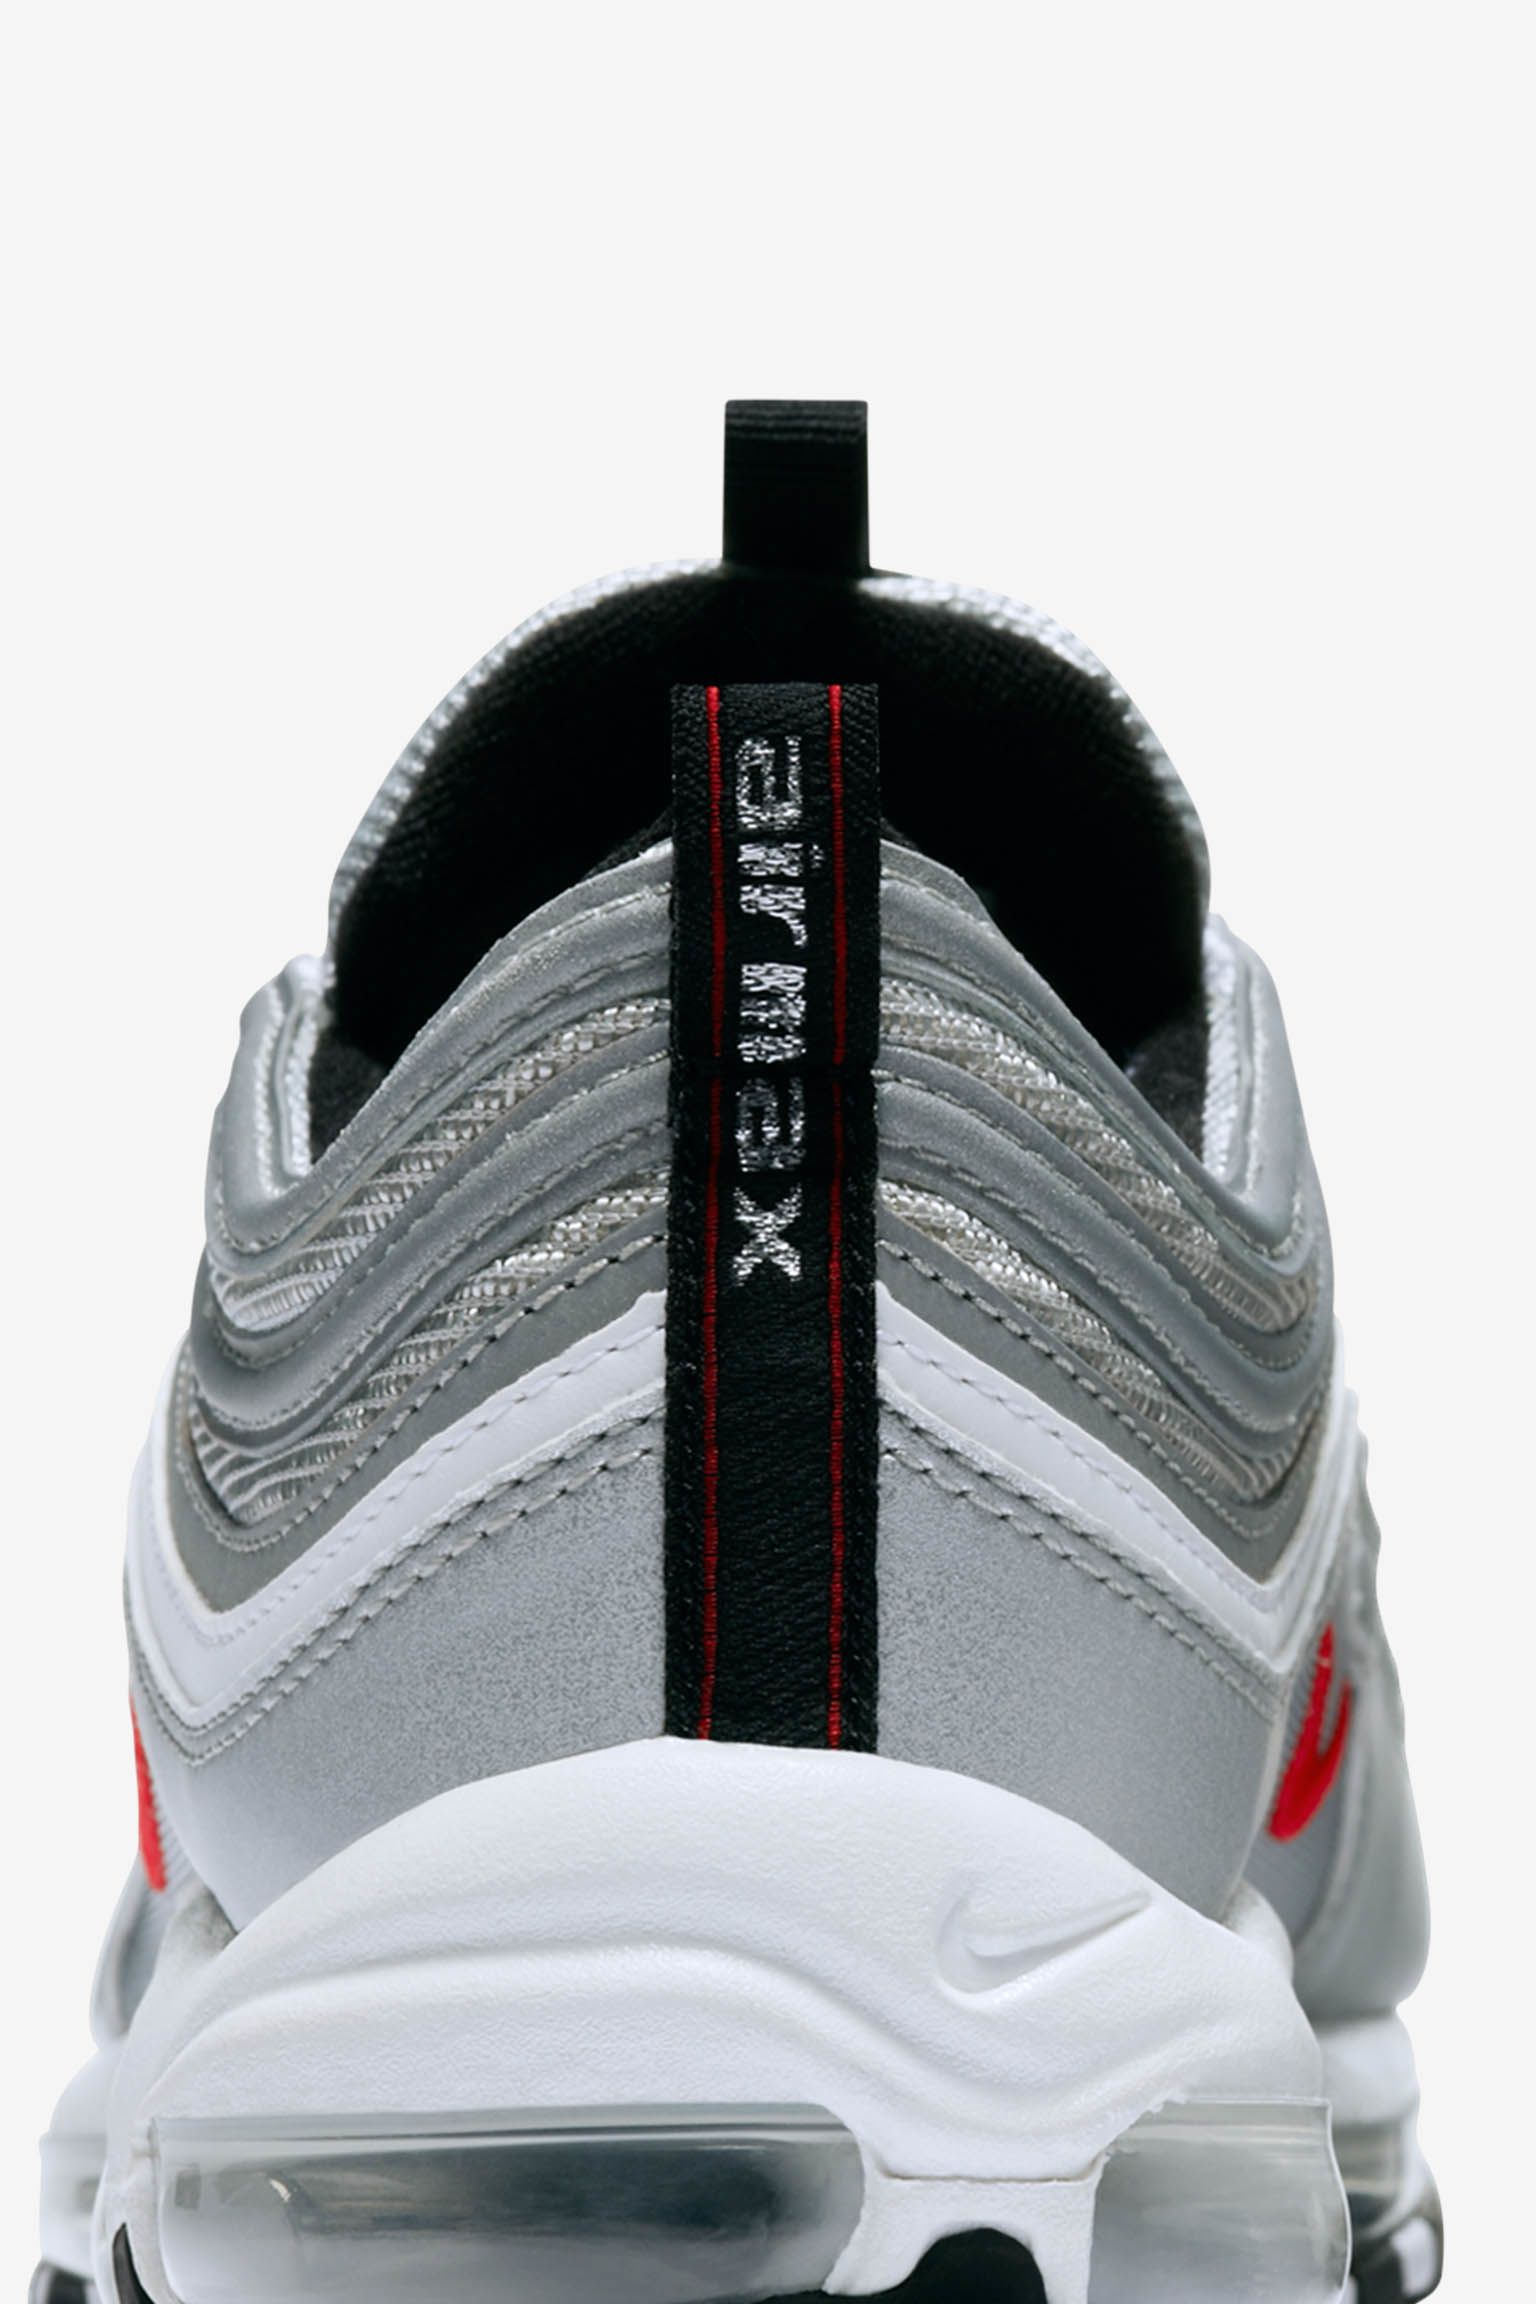 Air Max 97 OG "Metallic Silver". Nike SNKRS ES